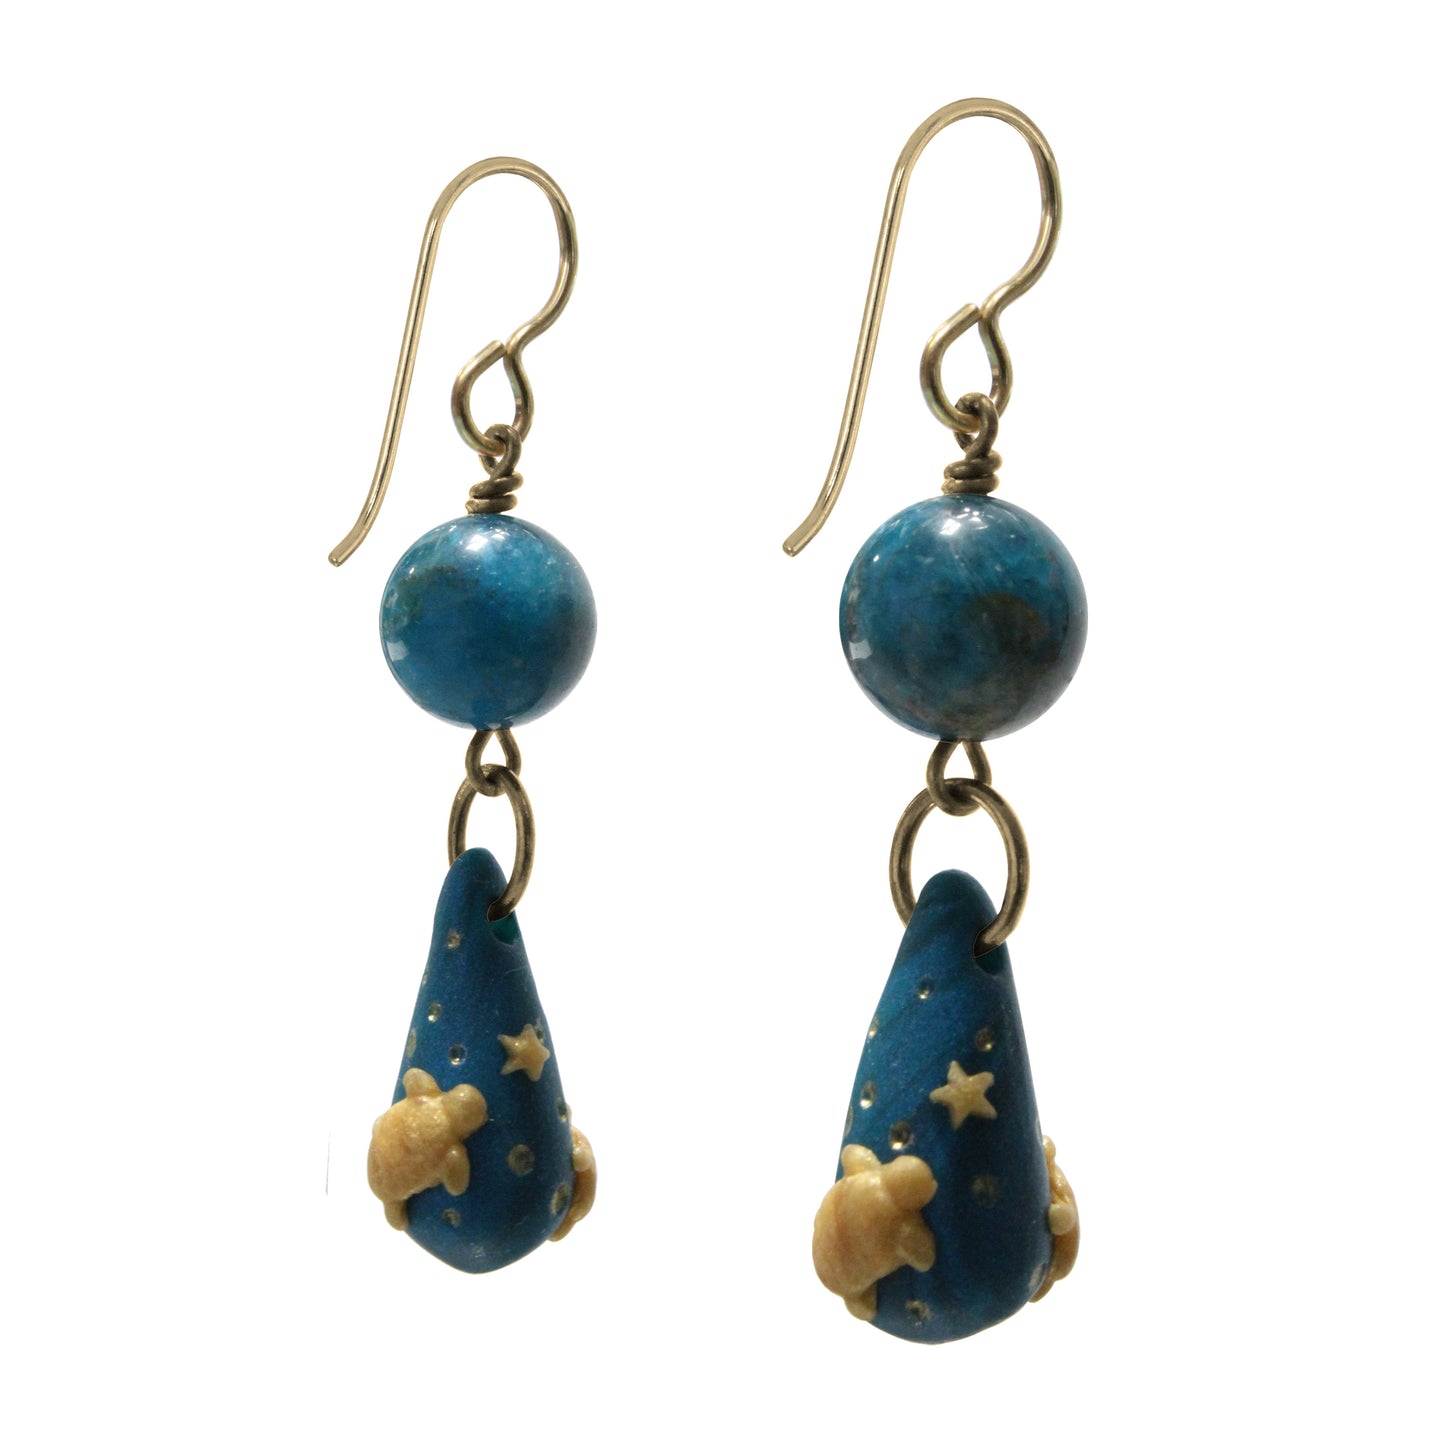 Sea Turtle Teardrop Earrings / 50mm length / with blue apatite gemstones / gold filled hook earwires